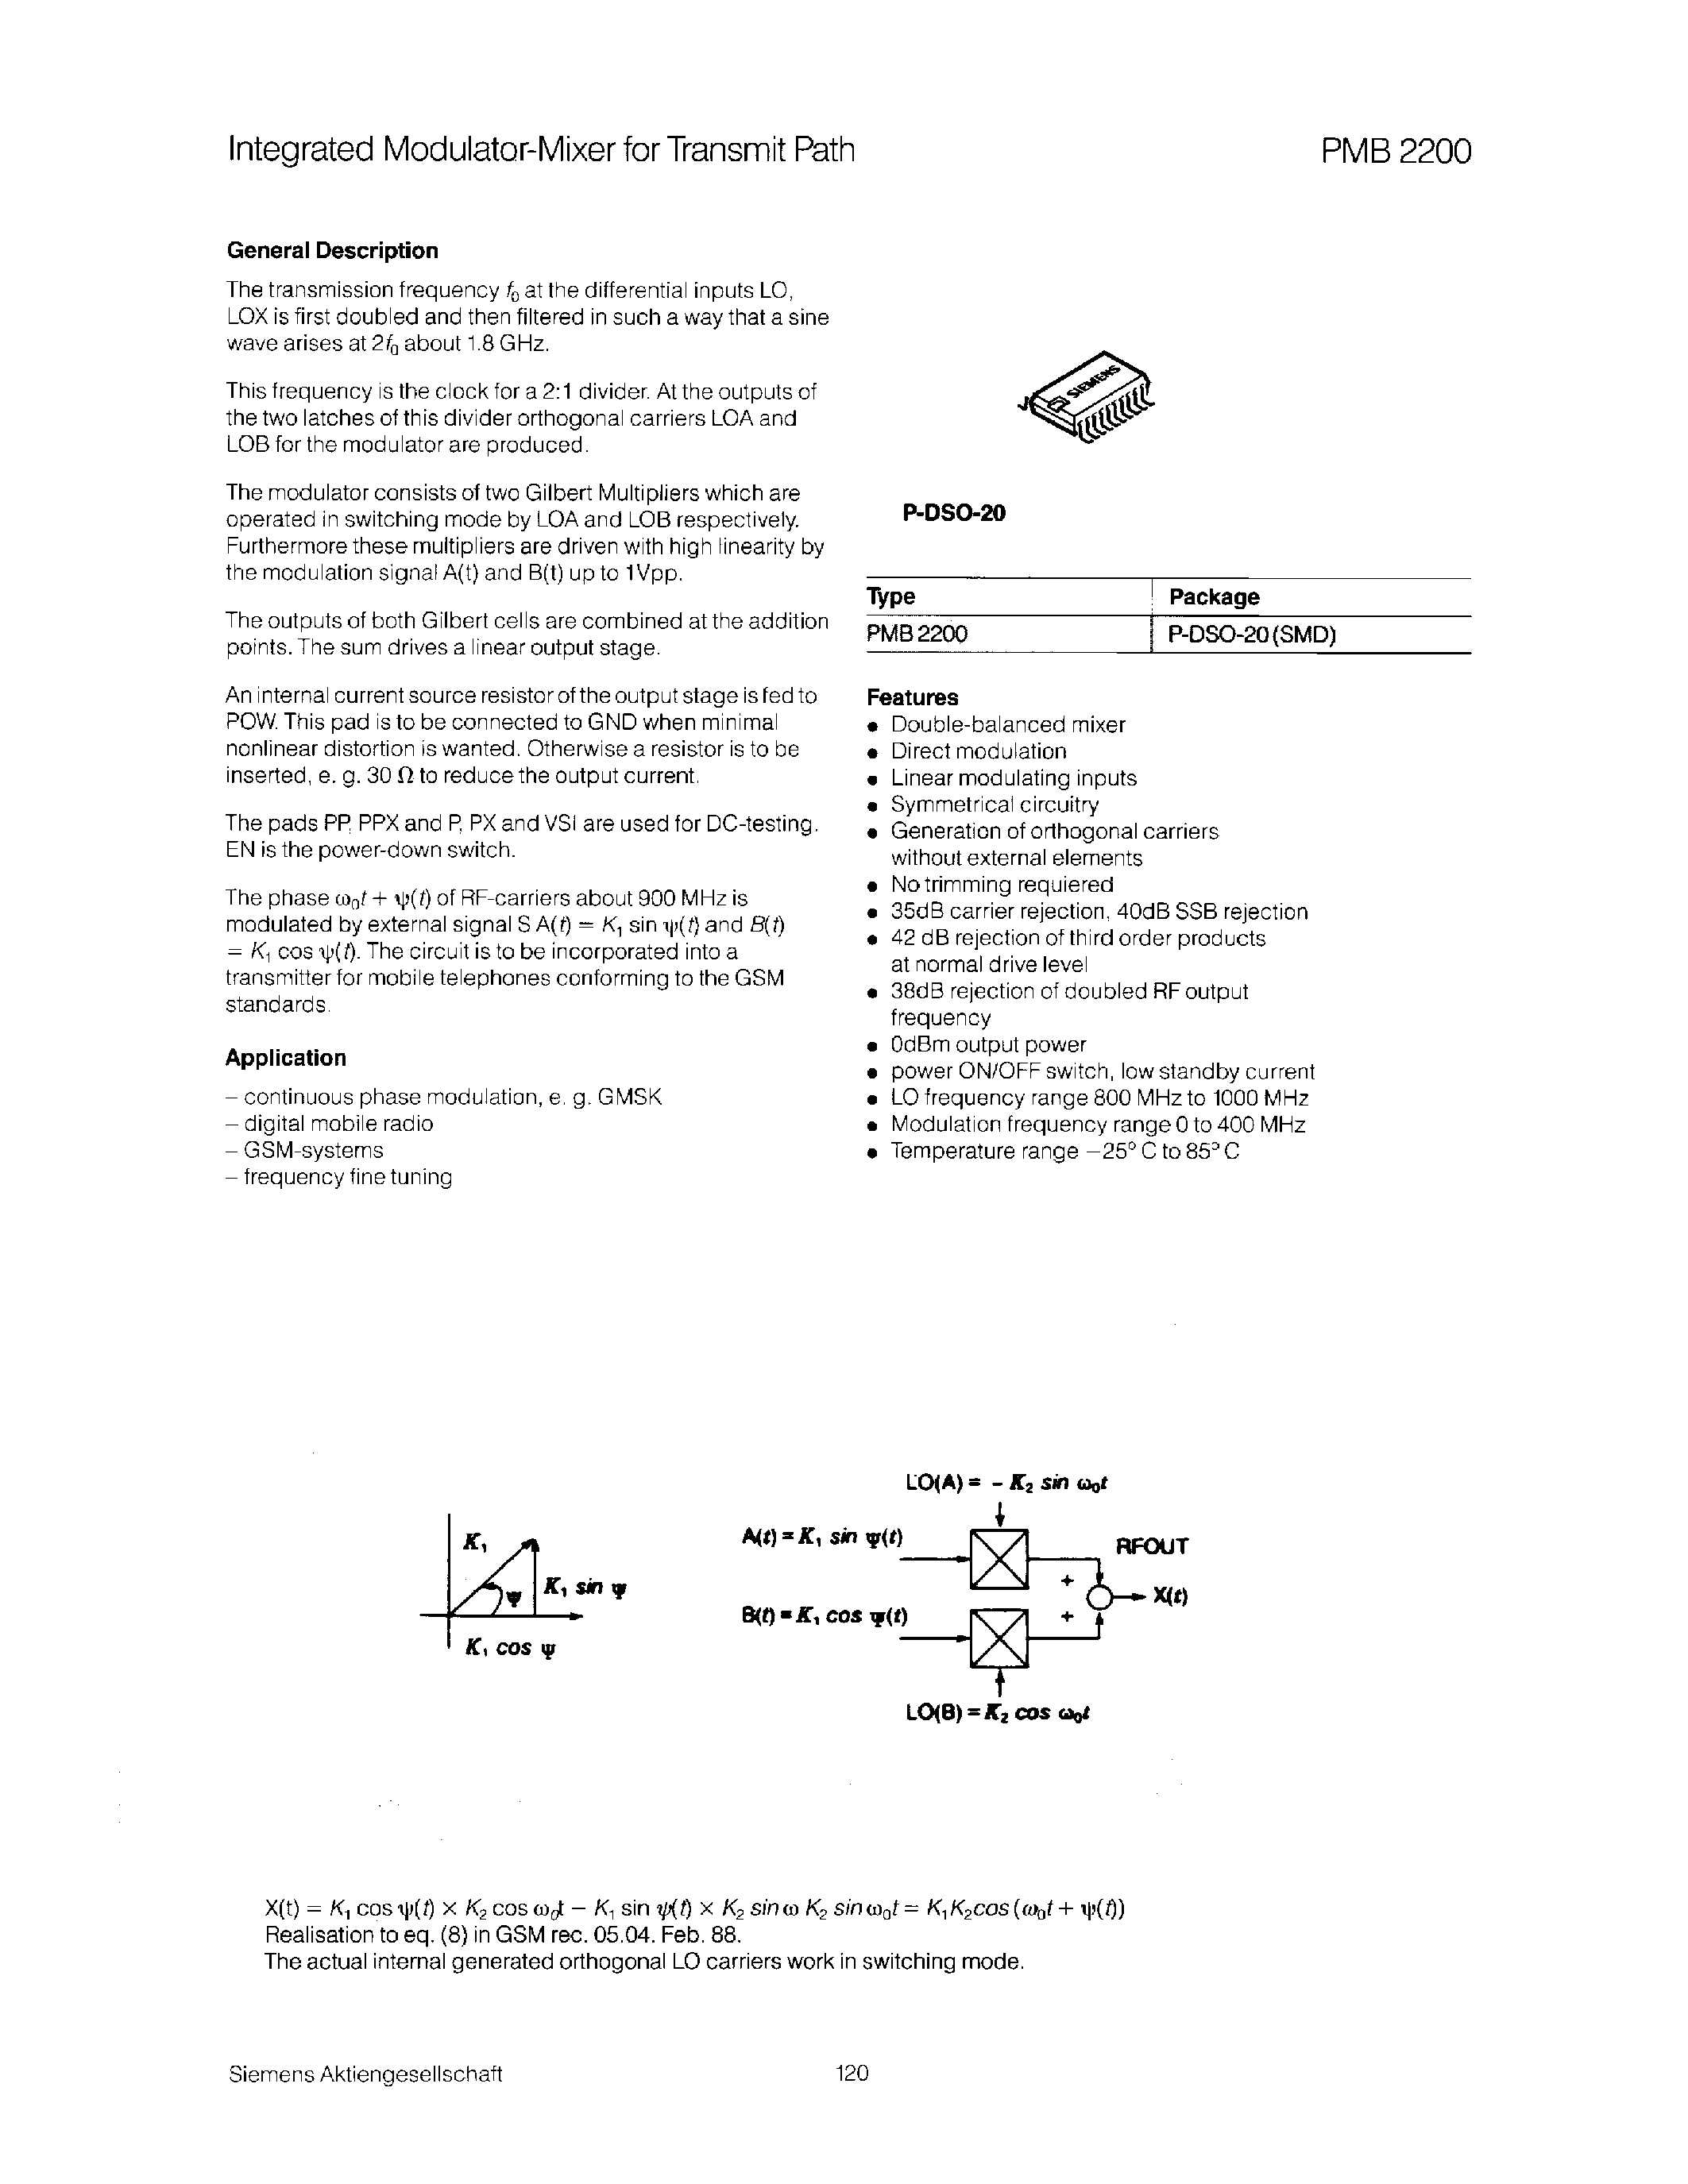 Datasheet P-DSO-20 - integrated modulator-mixer for transmit path page 2